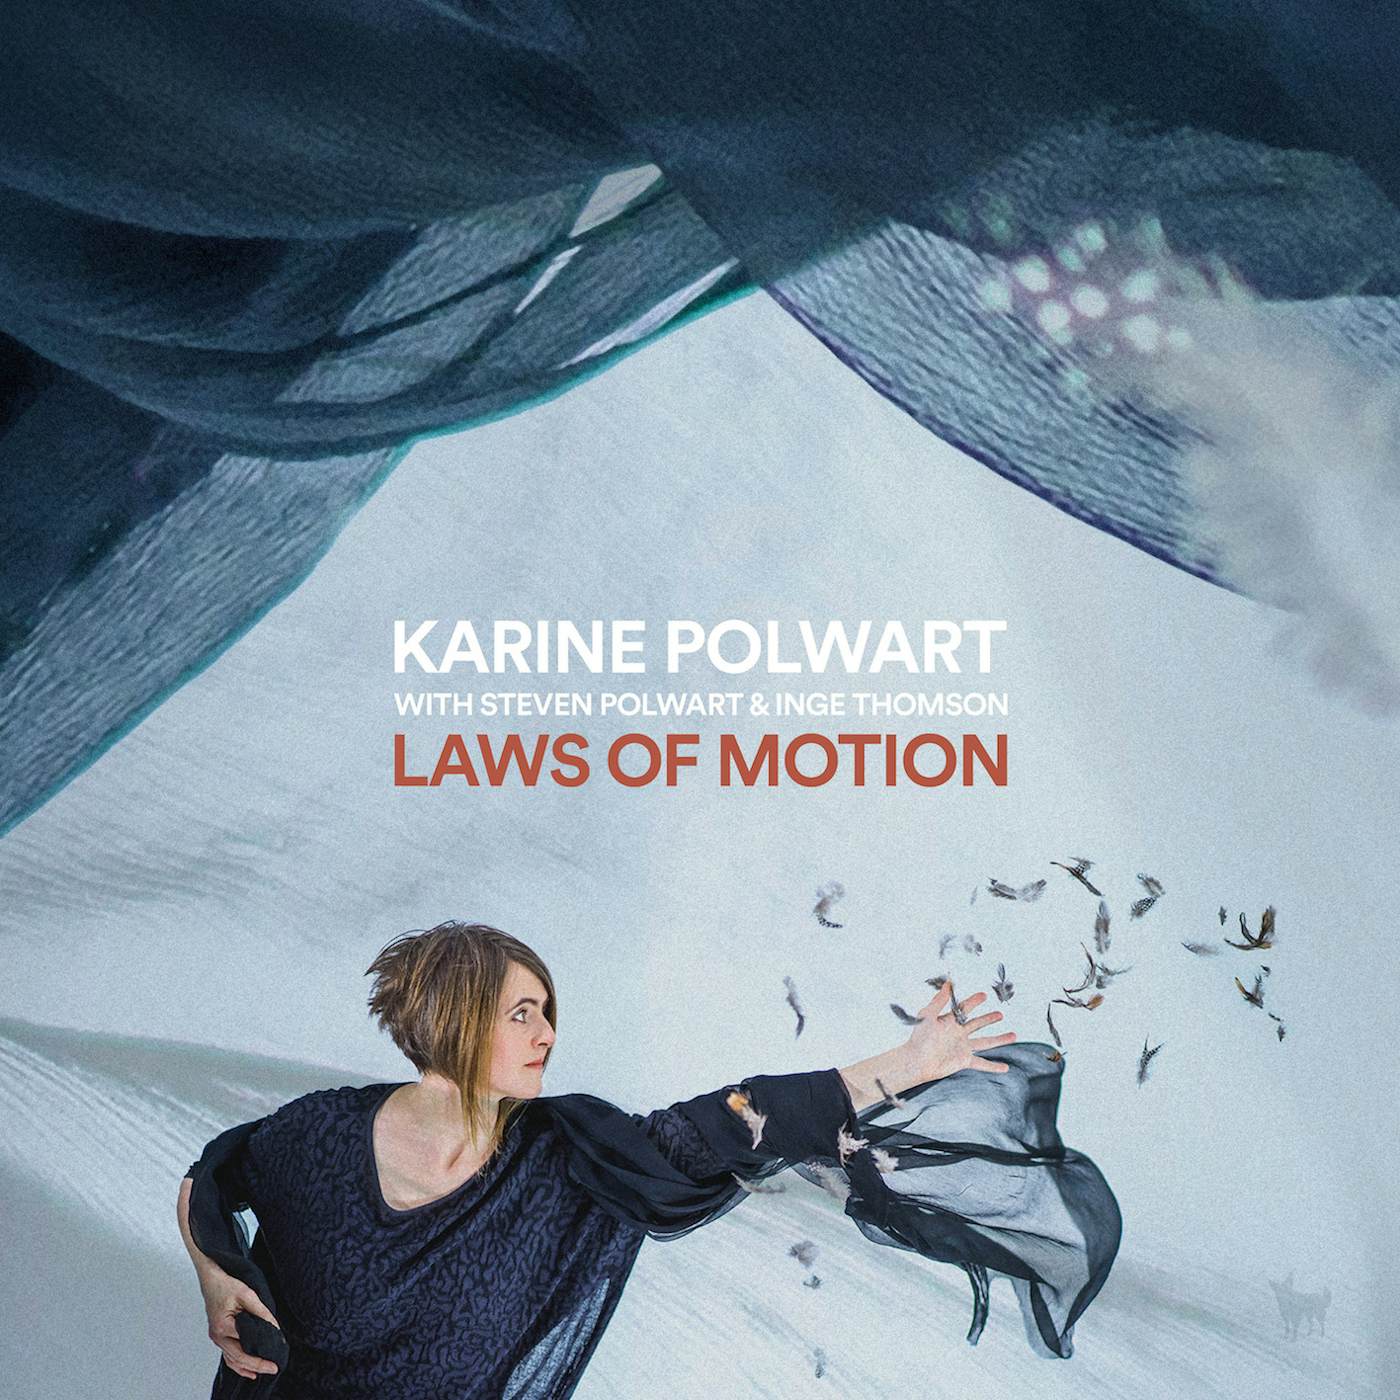 Karine Polwart Laws Of Motion Vinyl Record